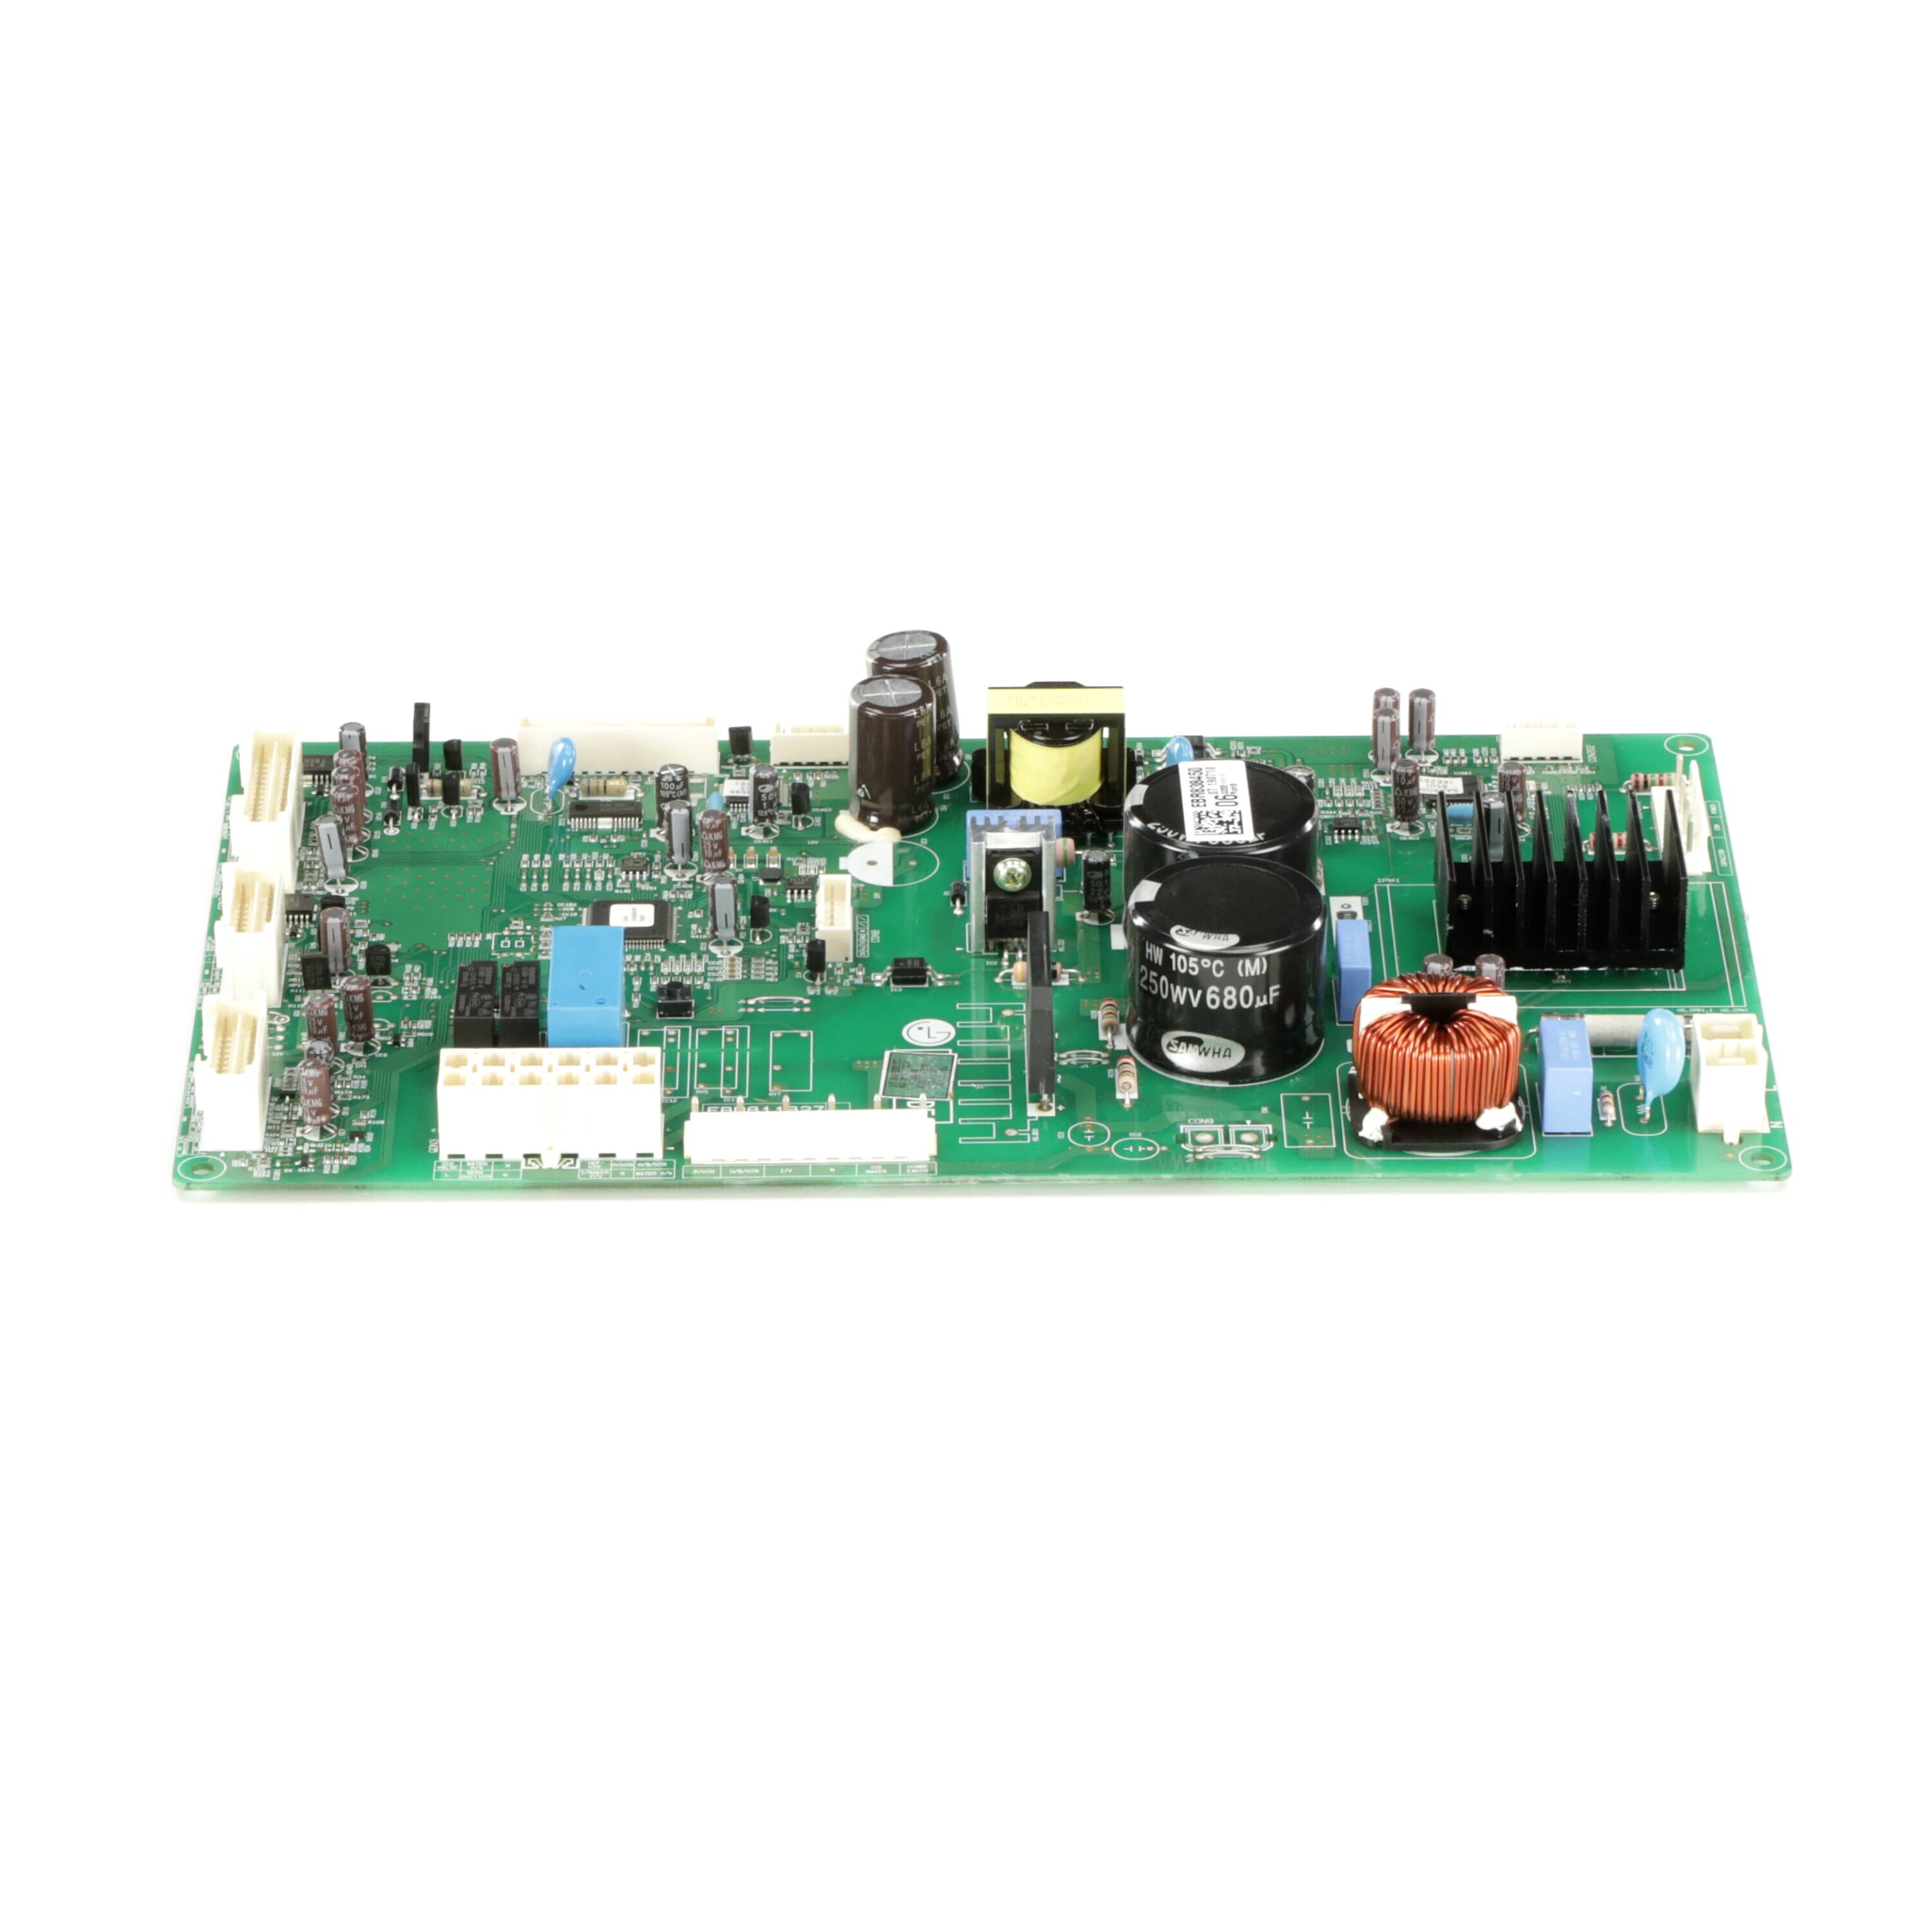 LG CSP30021068 Refrigerator Electronic Control Board